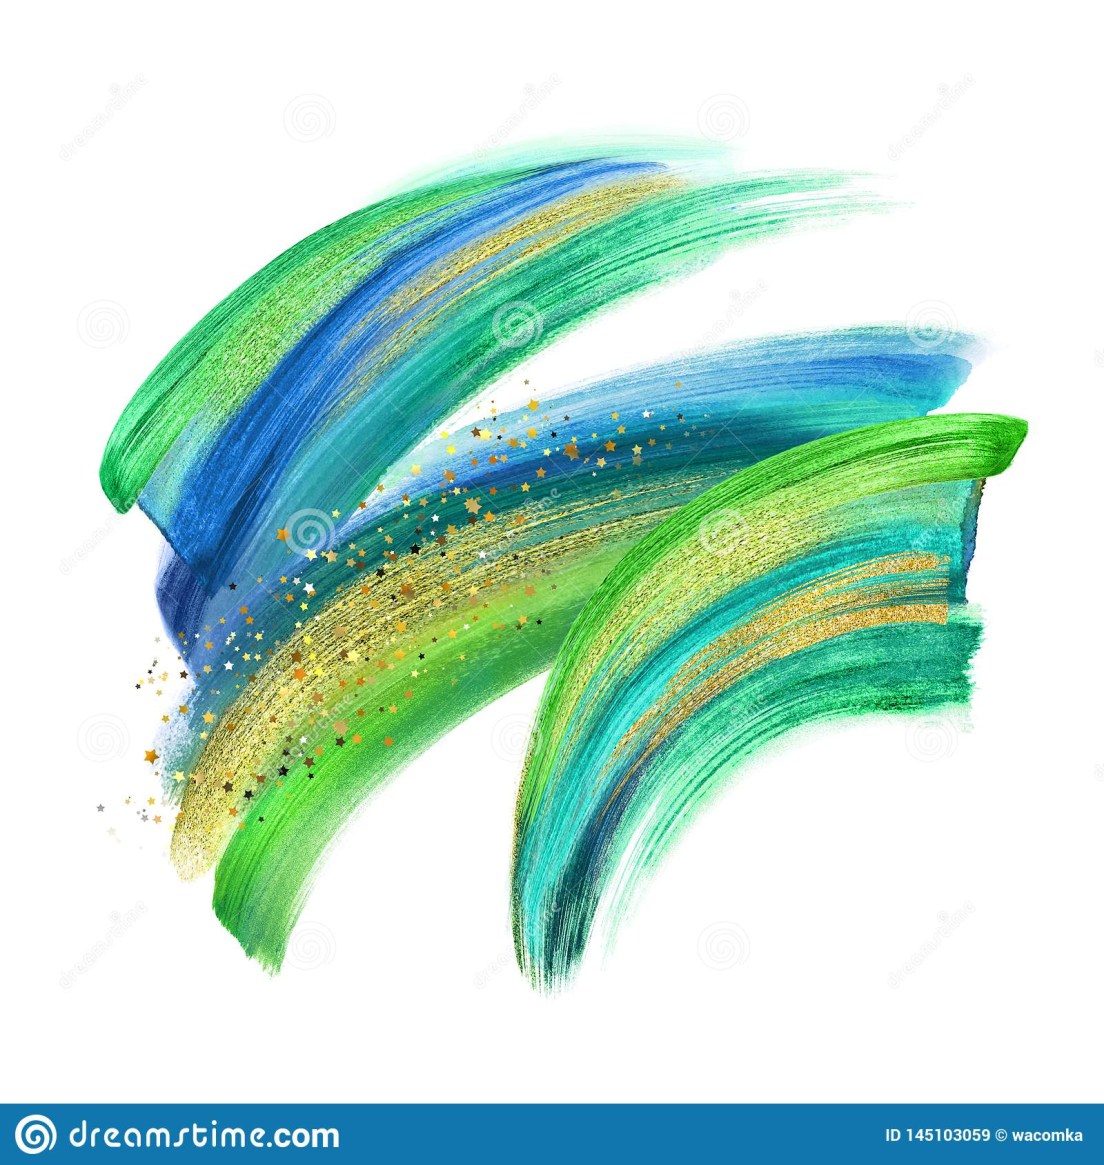 Picture of: Digital Illustration, Green Blue Gold Paint, Neon Brush Stroke